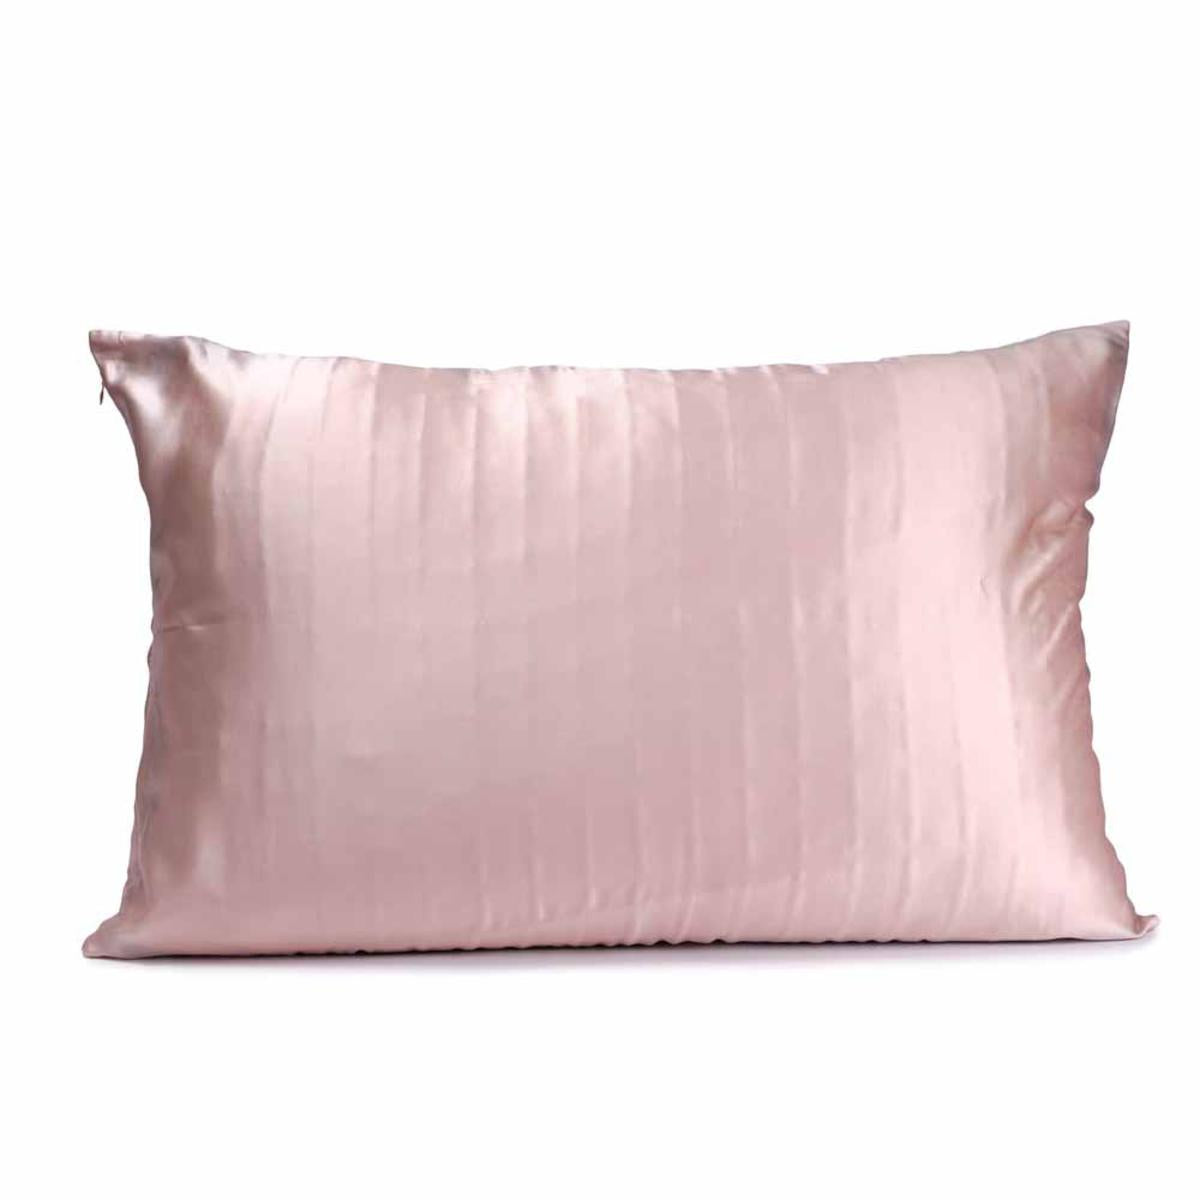 Blush Silks 100% Pure Mulberry Silk Pillowcase - Charcoal